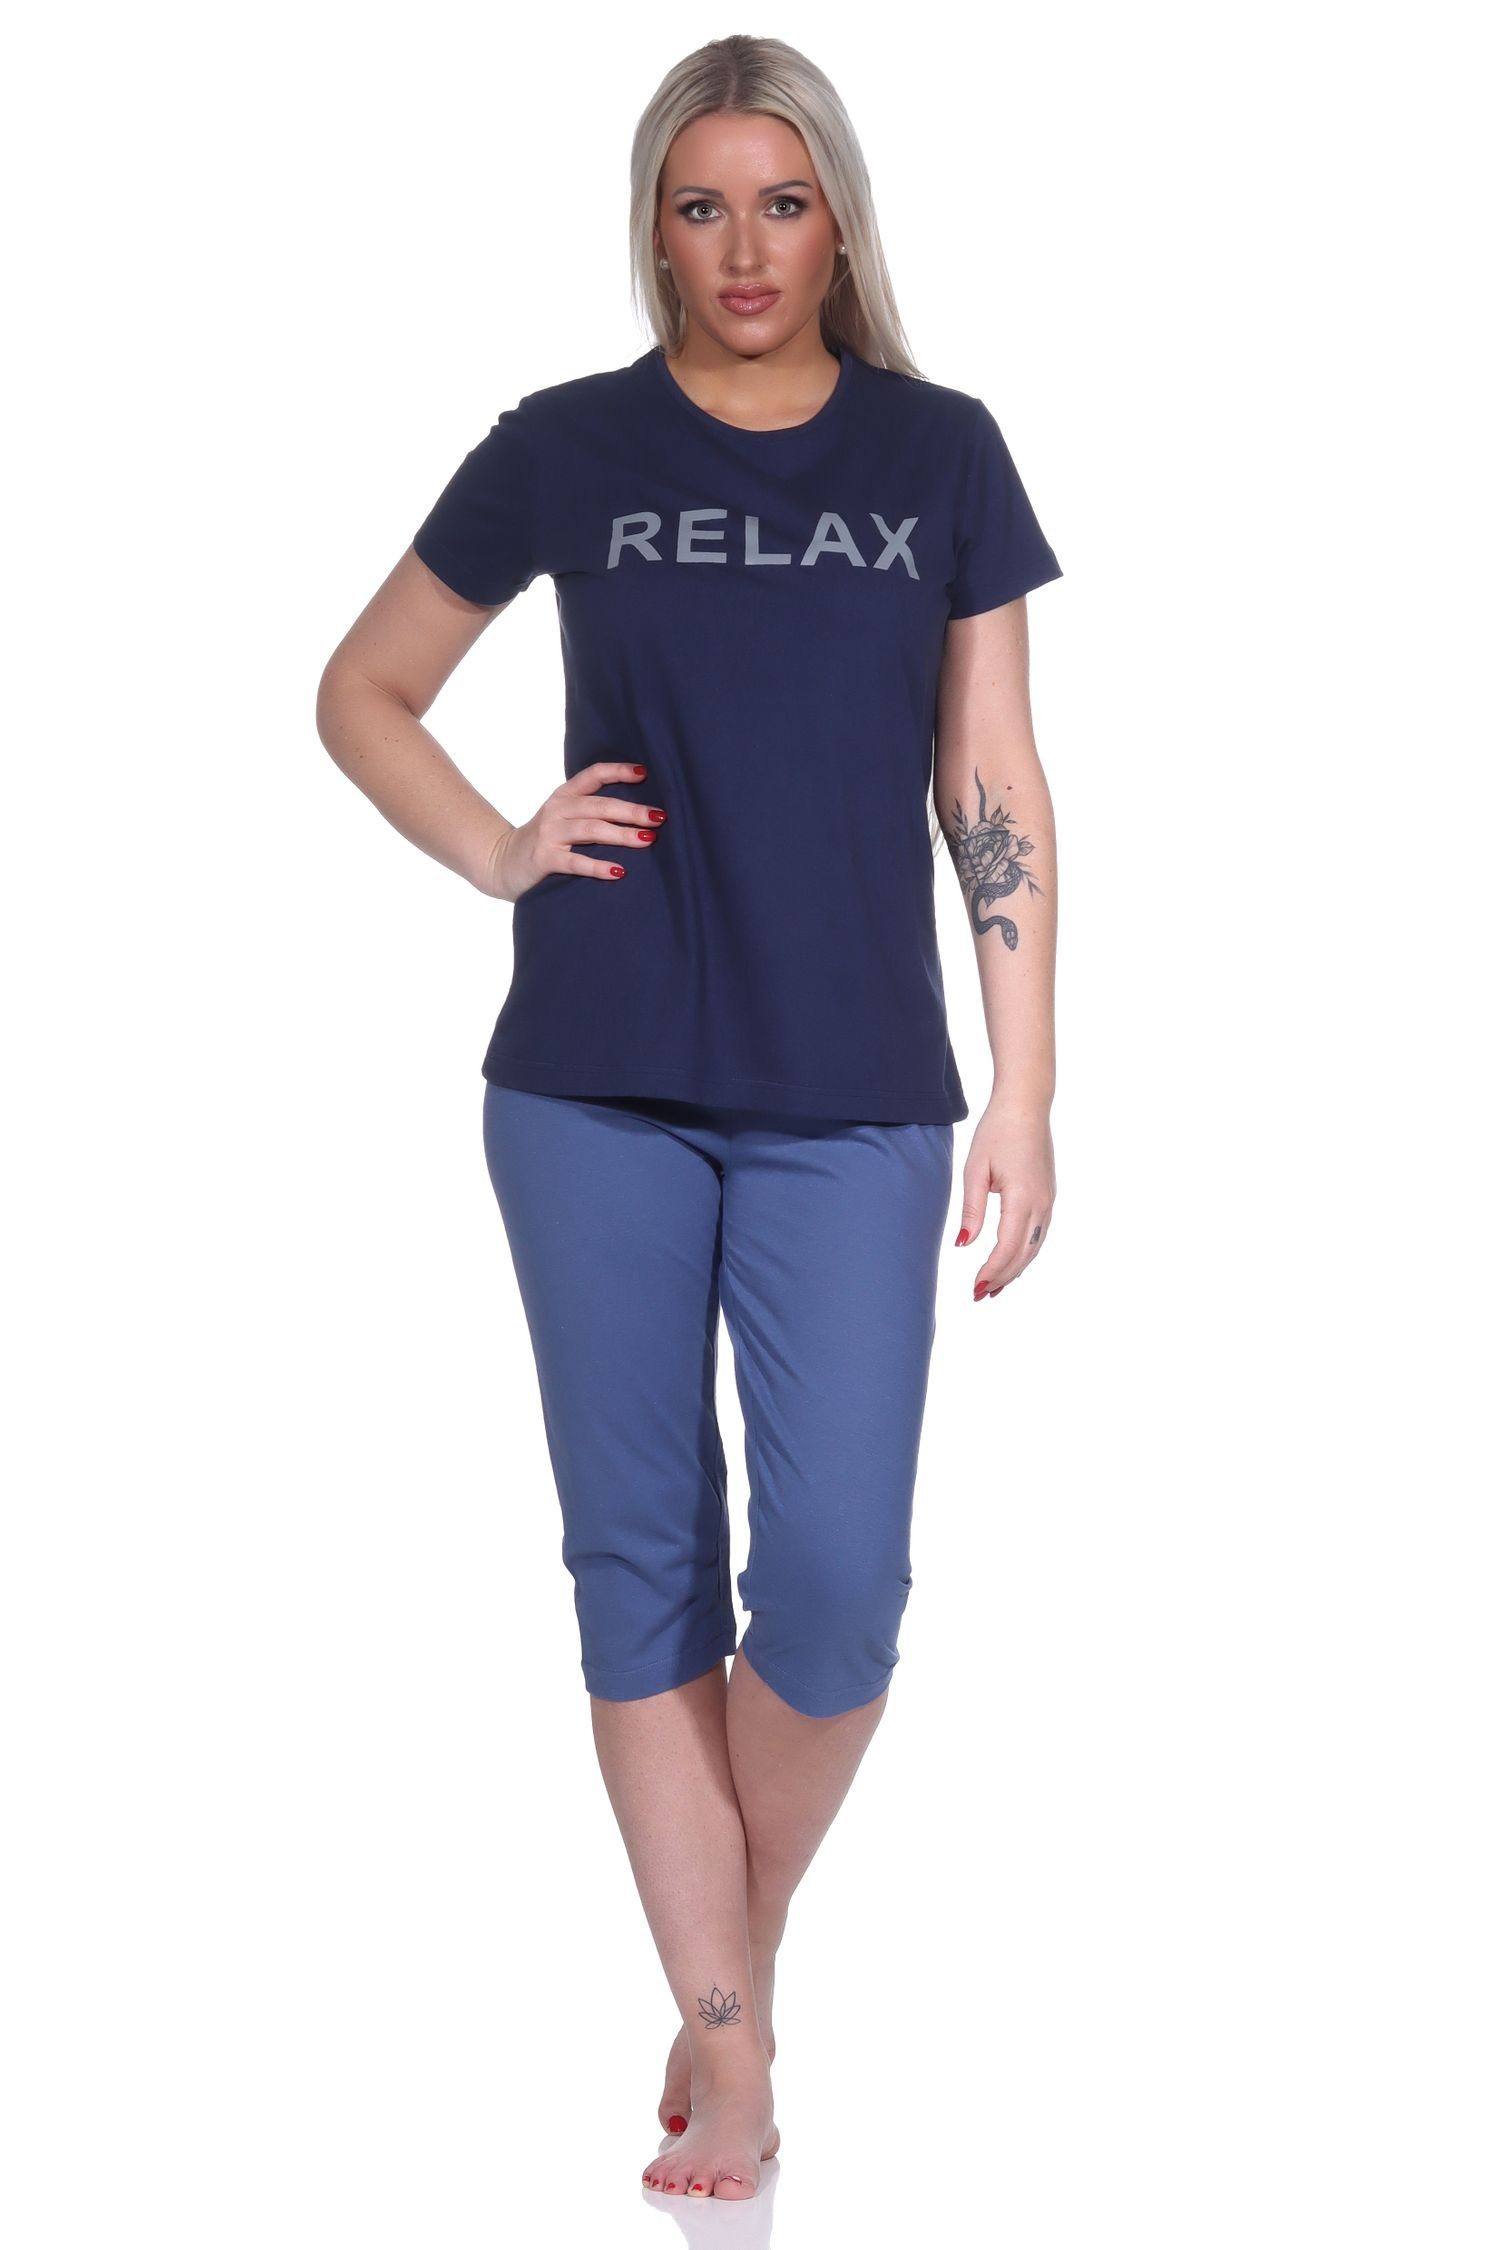 Normann Capri by mit kurzärmliger Pyjama, Pyjama "RELAX" Capri-Hose Damen Schlafanzug RELAX dunkelblau